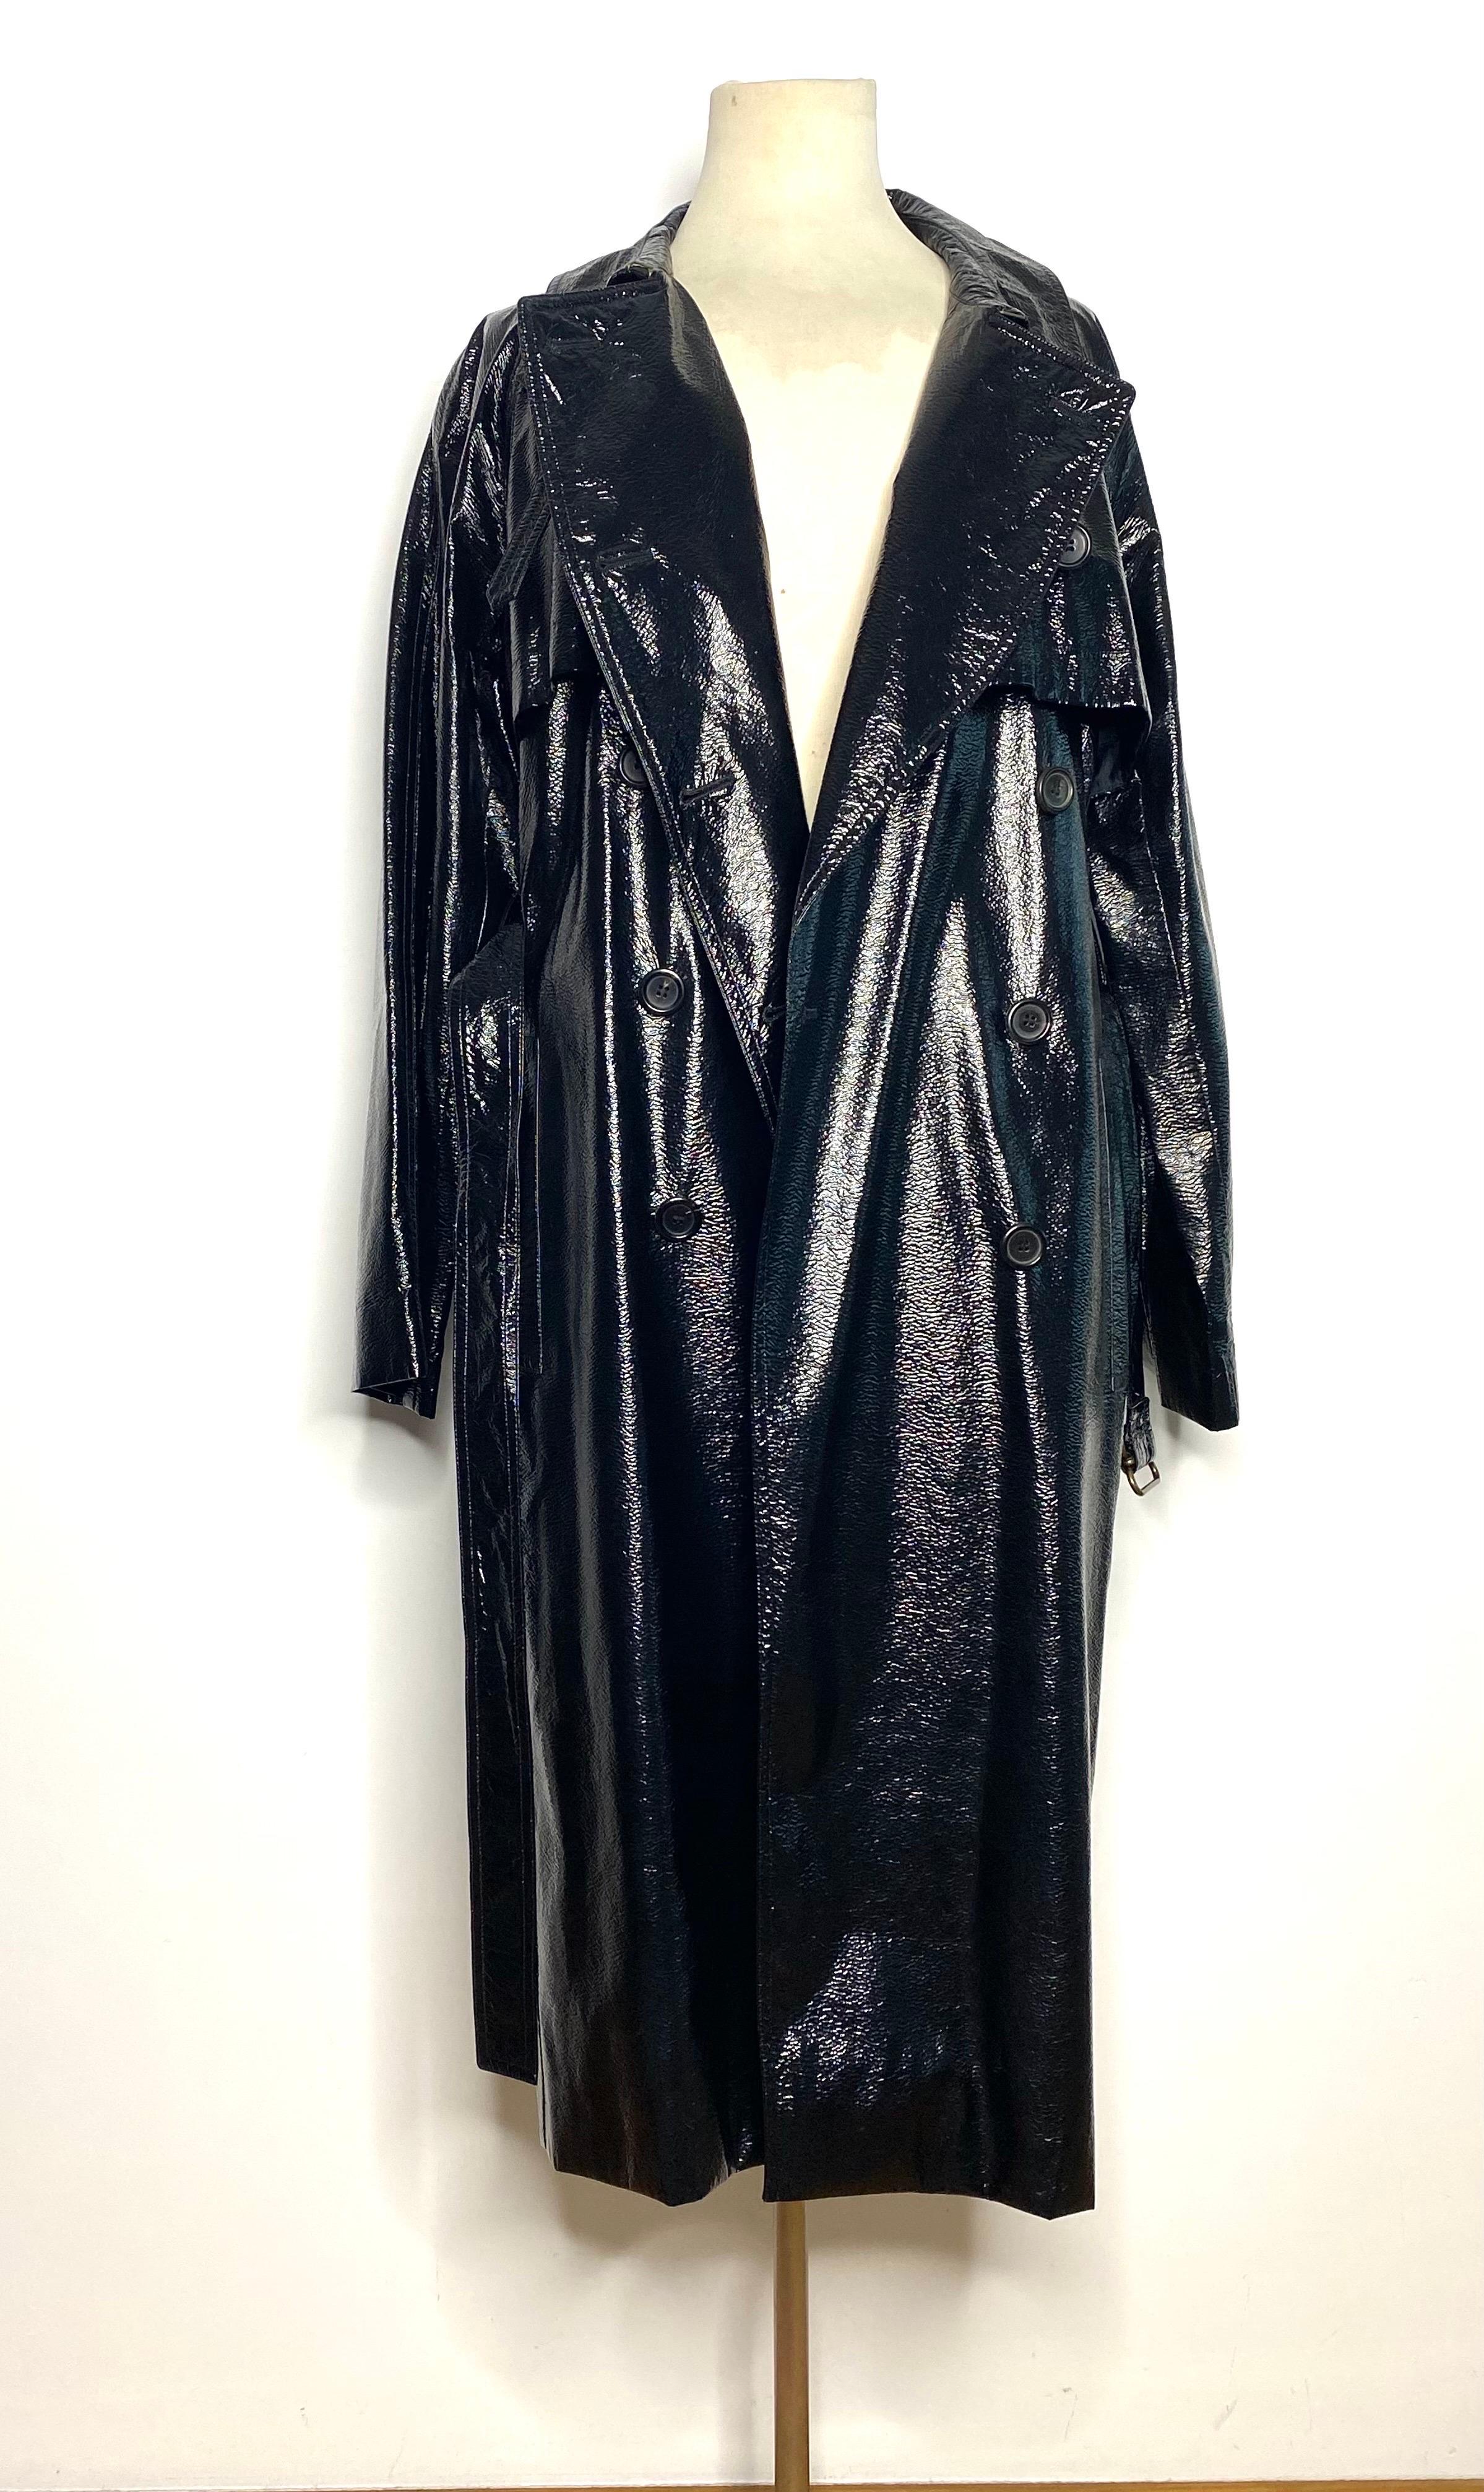 Yves saint laurent trench coat circa 1990 black patent 1